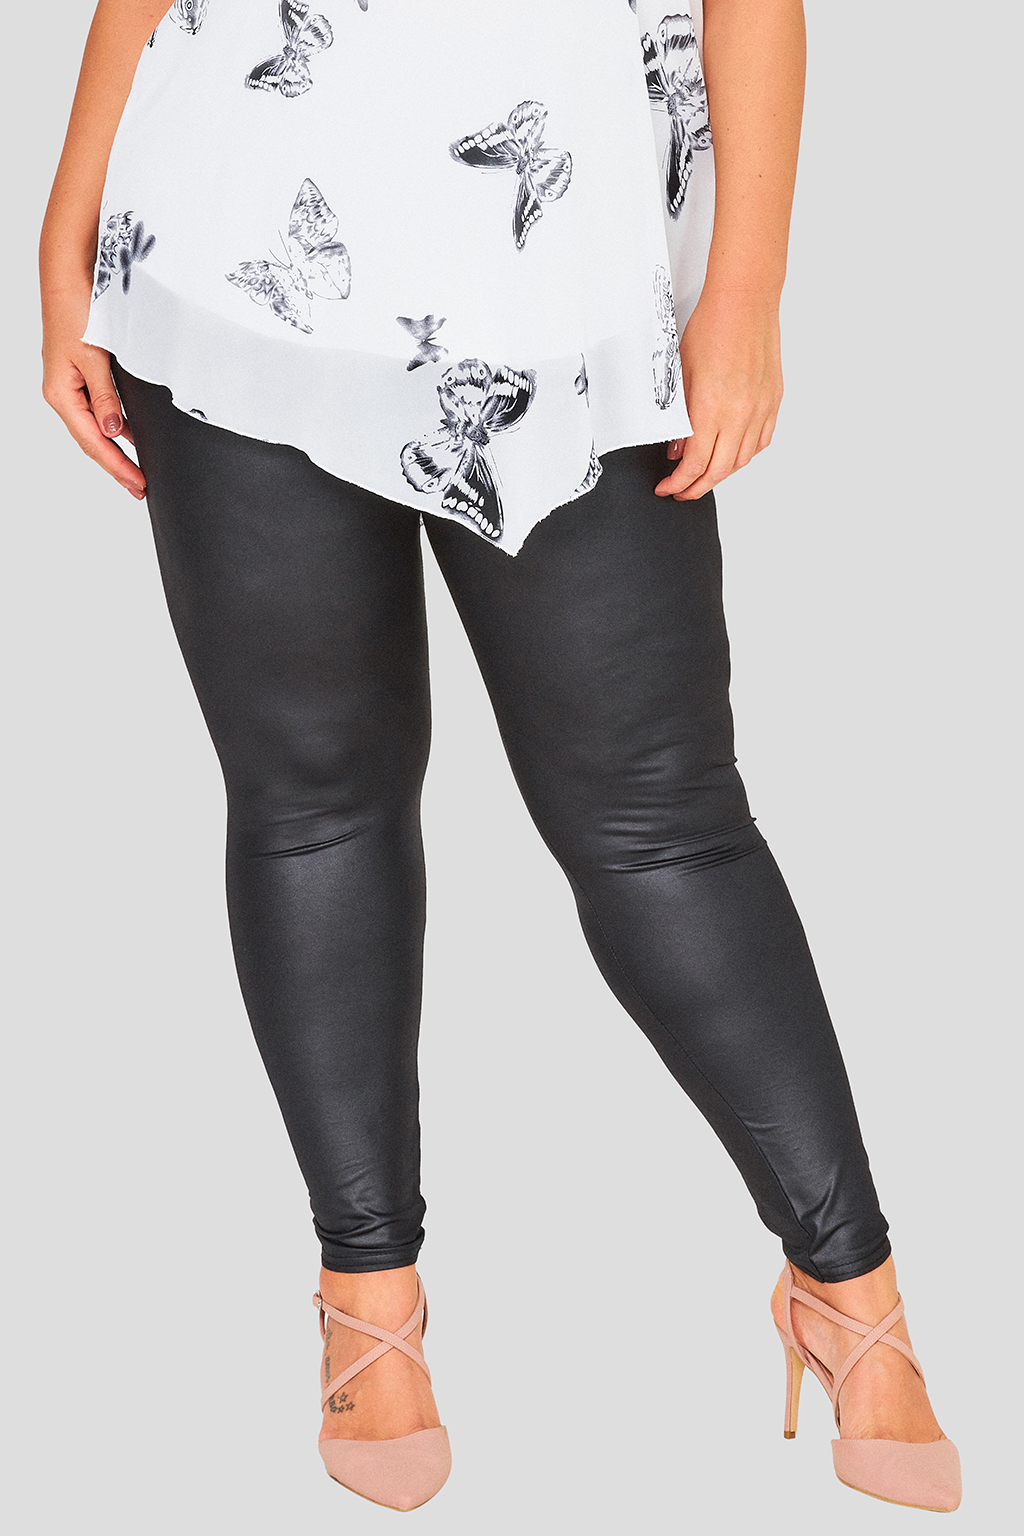 Leggings Plus Size Black Leather PU Leggings Women Women Pants New US Waist  U8M6 - Walmart.ca